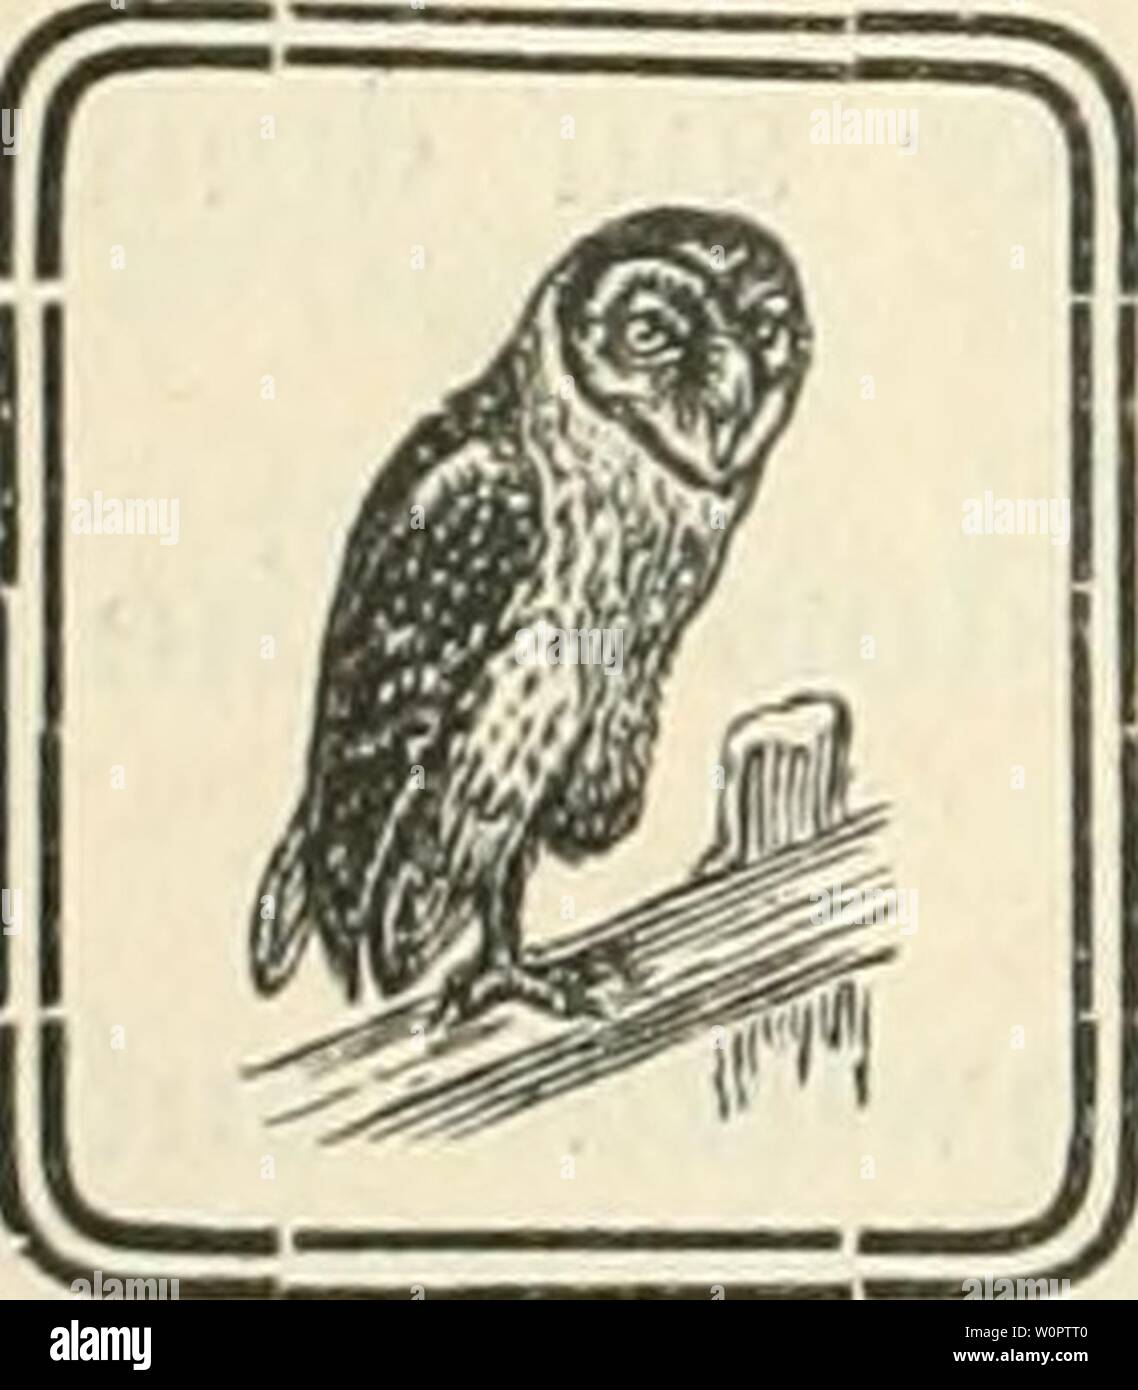 Imagen de archivo de la página 139 de Der Ornithologische Beobachter (1902). Der Beobachter Ornithologische derornithologisc10alas Año: 1902 106 300 (Clangula Schellente glaucioii L.). o uoscliossen von Fi-. (Auf Scinvitzer lein Moos.seodorl'see am '29. Dezeinhor 18()9. - Q ,i&GT;'escliüsseii auf dem Moiissoedoi'fsee am 80. Dezember 1869. N. S. Mittlerer Säger, 30!) (Meius serrator L.). (Lesdiussen vuii Fr. En Seedoif Scliwitzer auf dem üee, Dezember 1869. XV. Ordnung: Colynibidac - Tanclier. 1''. Foiiiilic: P()(Jif:ij)!dn(&gt; - Krontftuchcr. Haubentaucher, 314 (Podiceps cristatus T.). "1887, Foto de stock